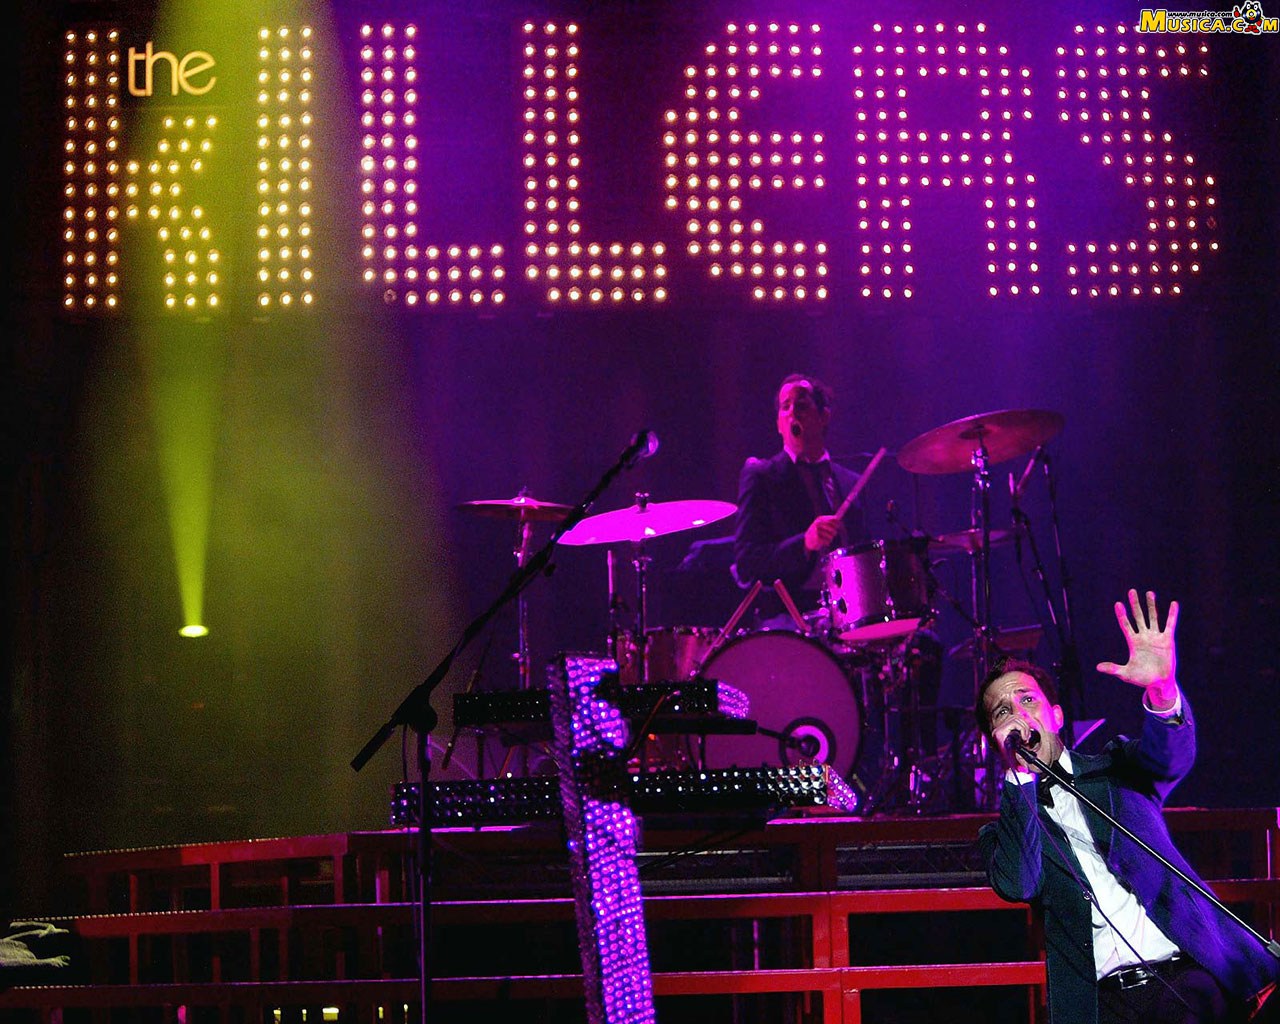 Fondo de pantalla de The Killers